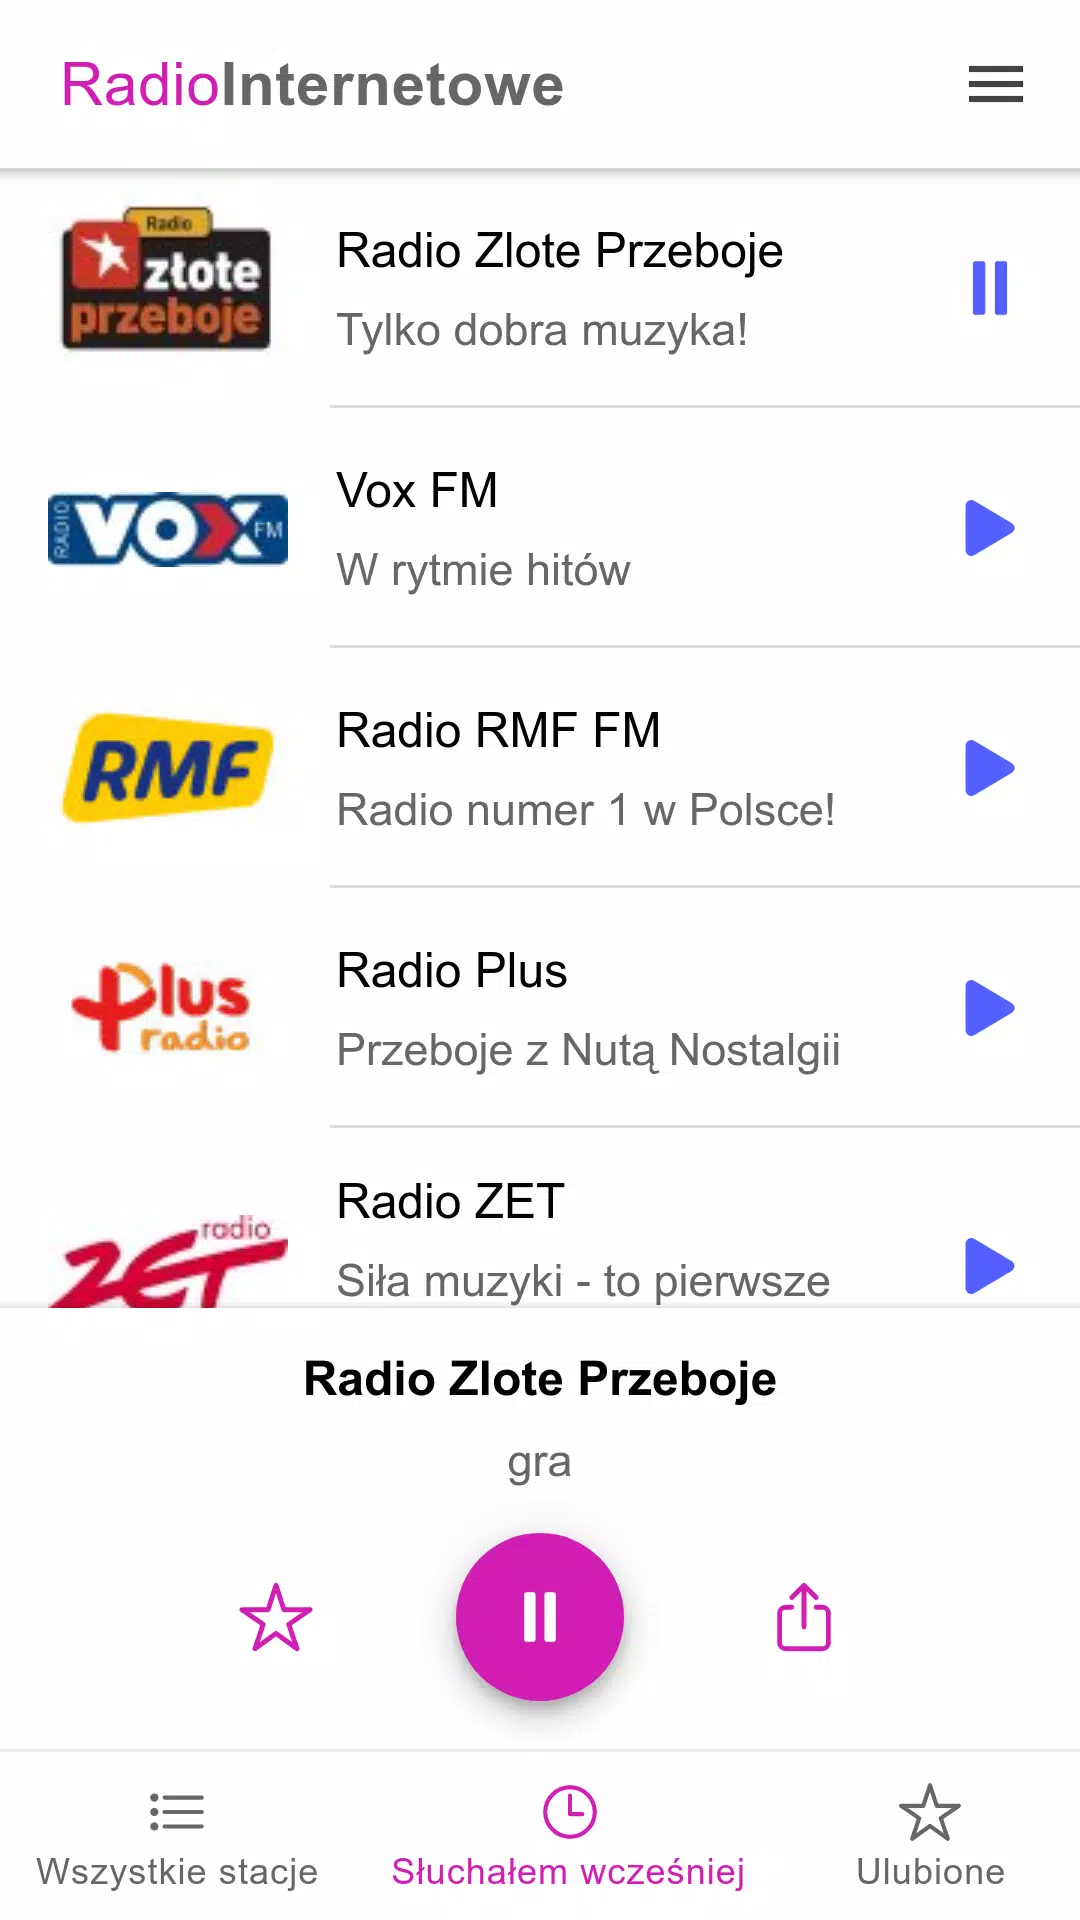 Radio Internetowe - darmowe polskie radio HD for Android - APK Download